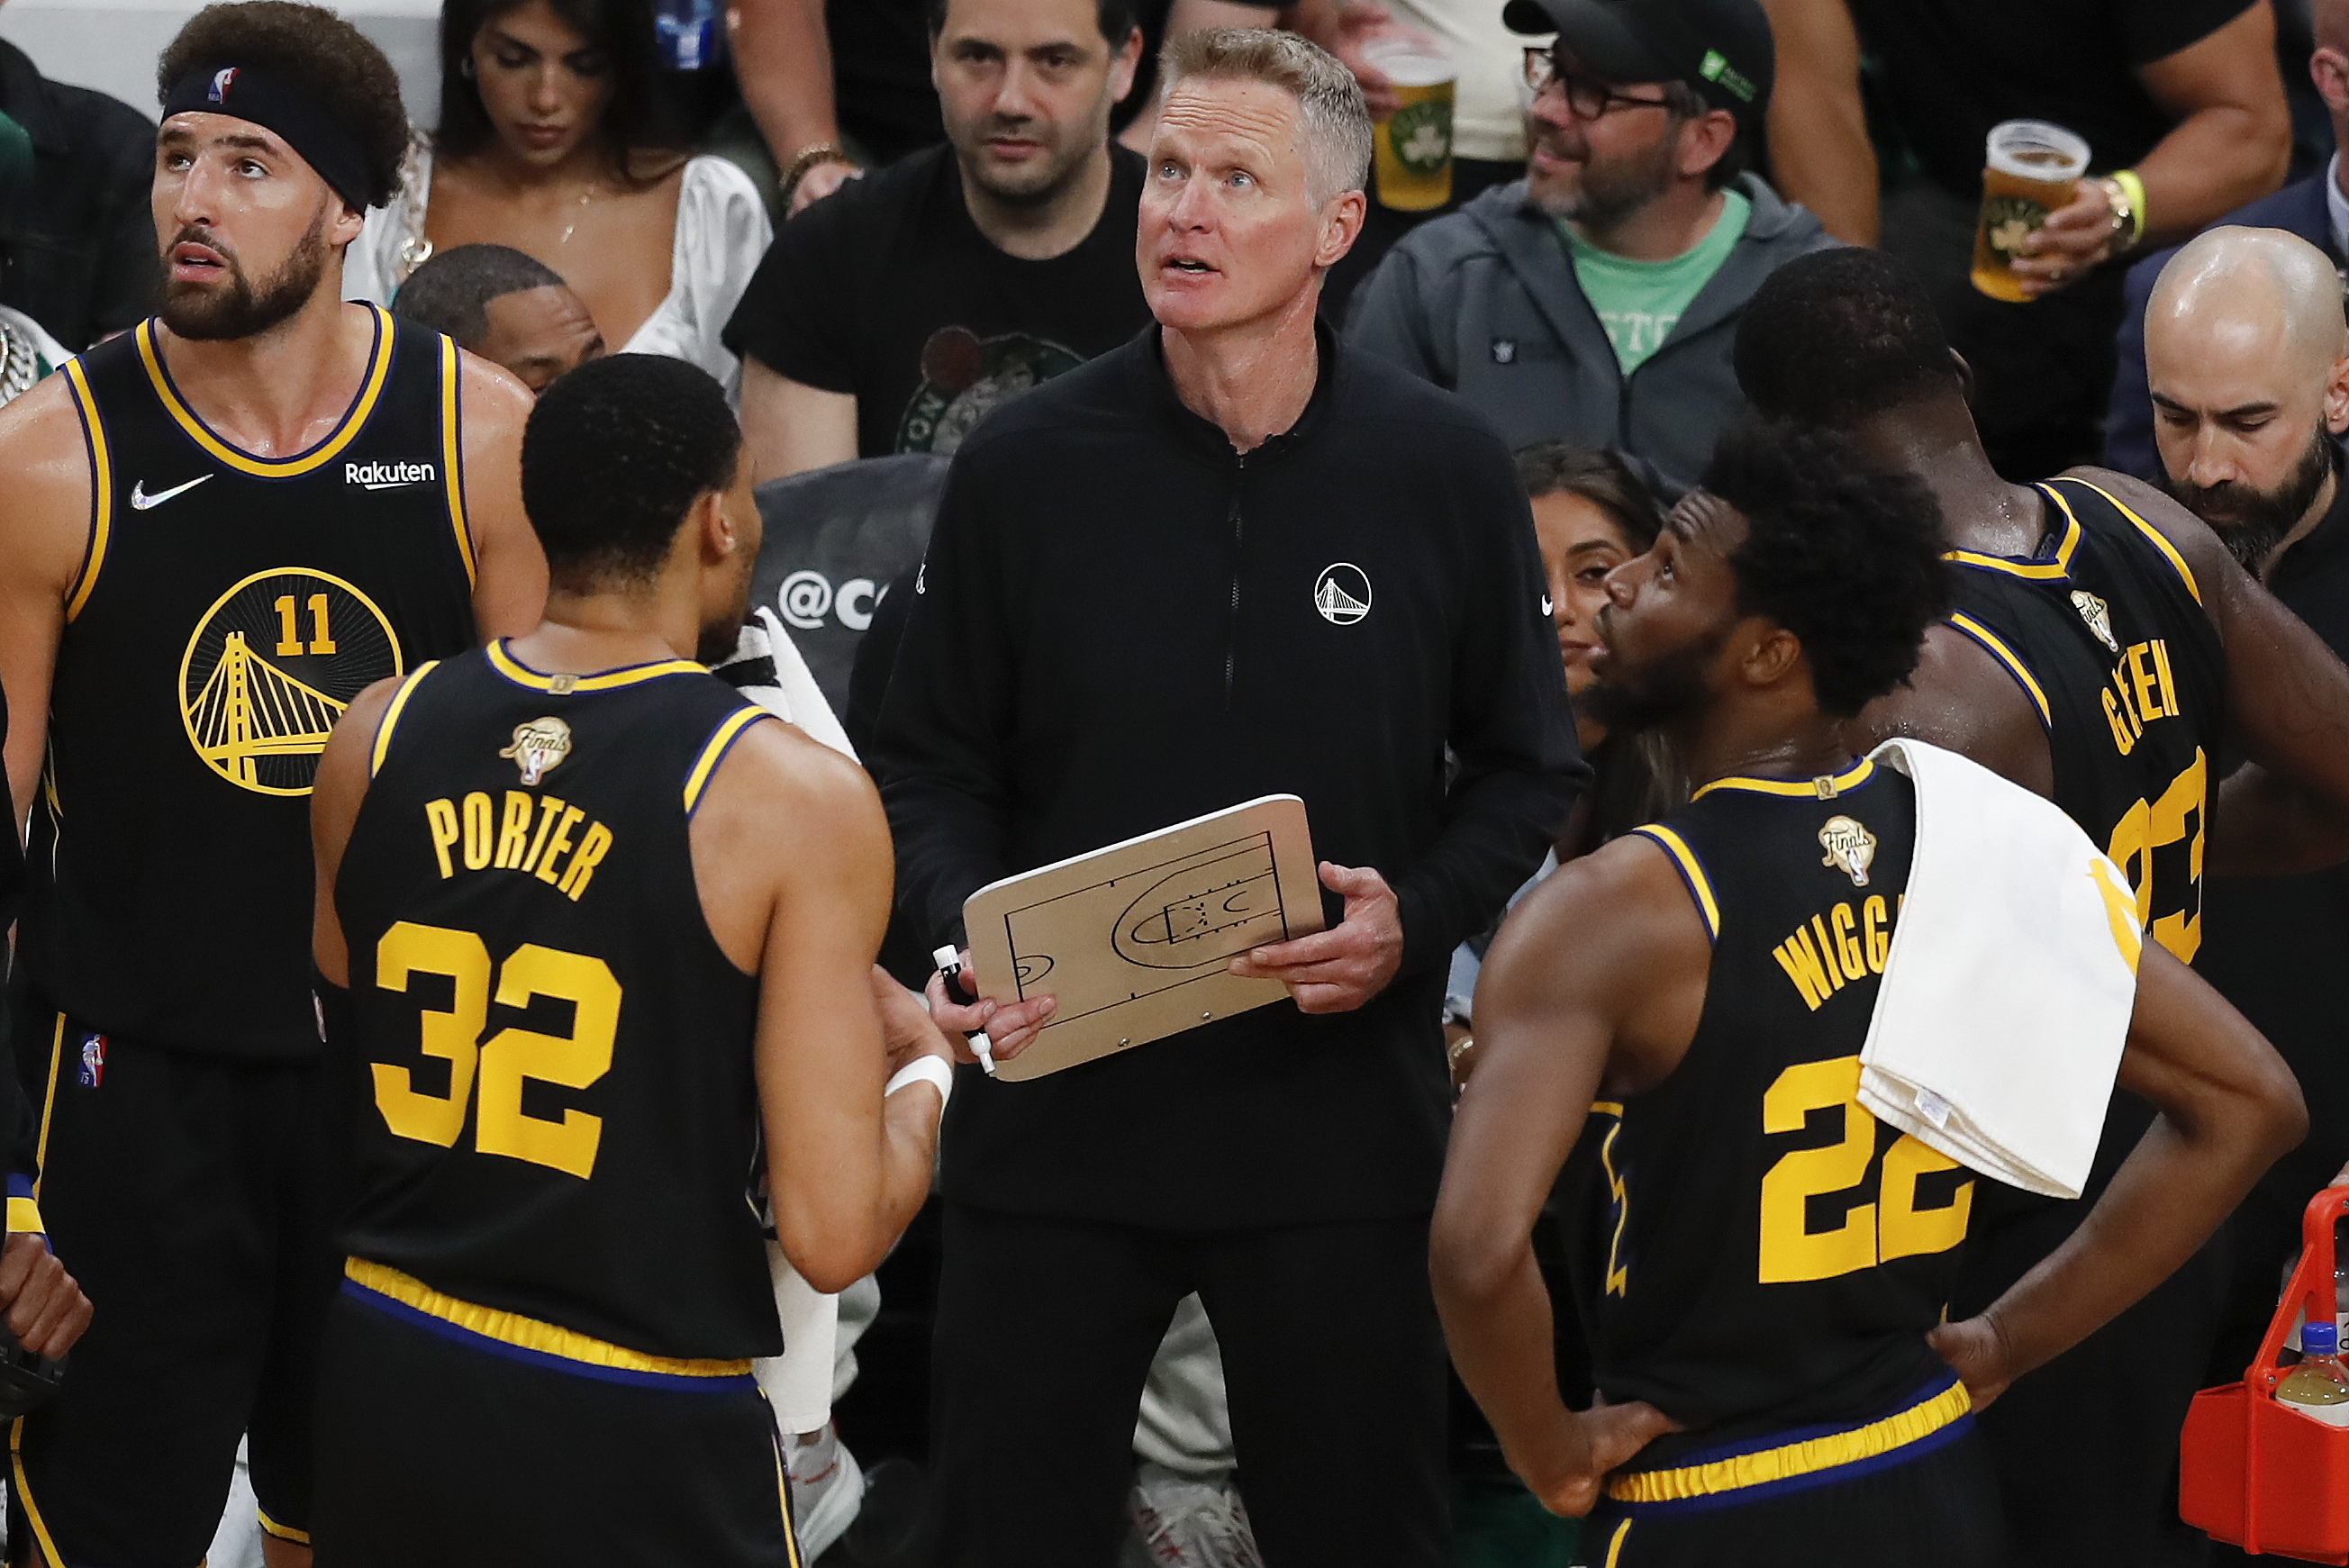 Steve Kerr: Golden State Warriors coach makes history as he wins